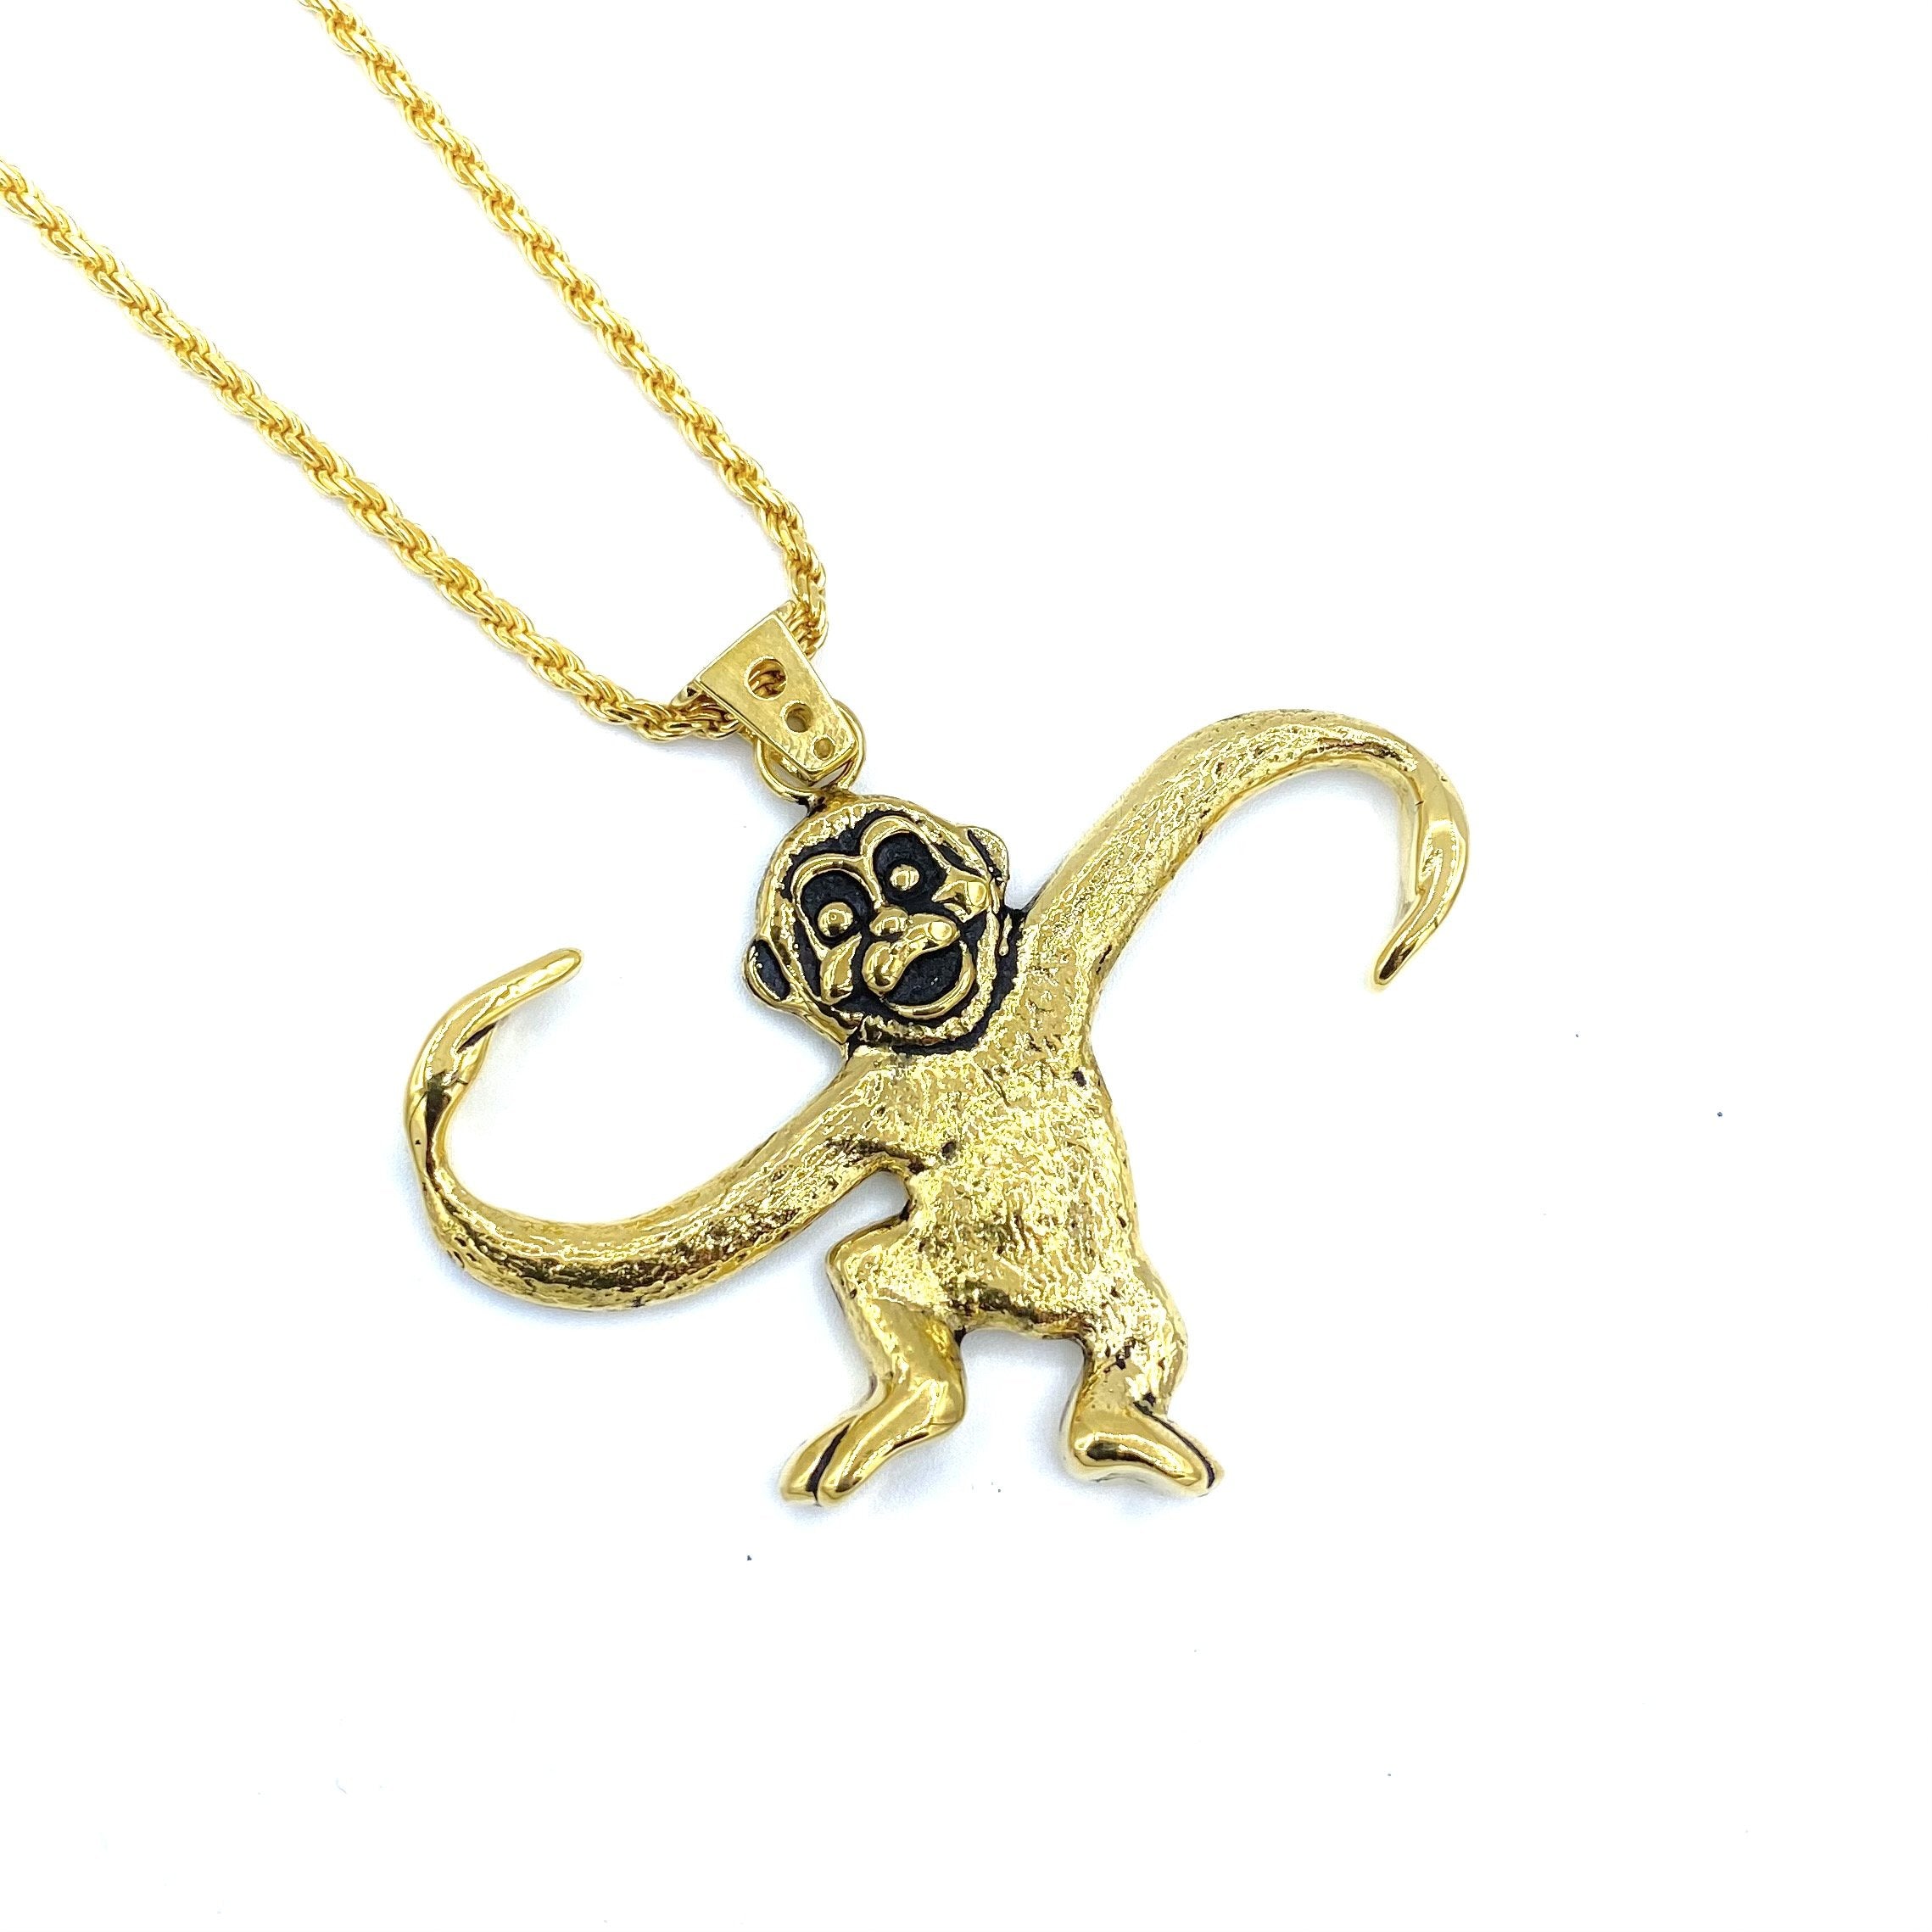 Single Monkey Pendant pm necklaces Precious Metals Vermeil - 24k Gold Plated 